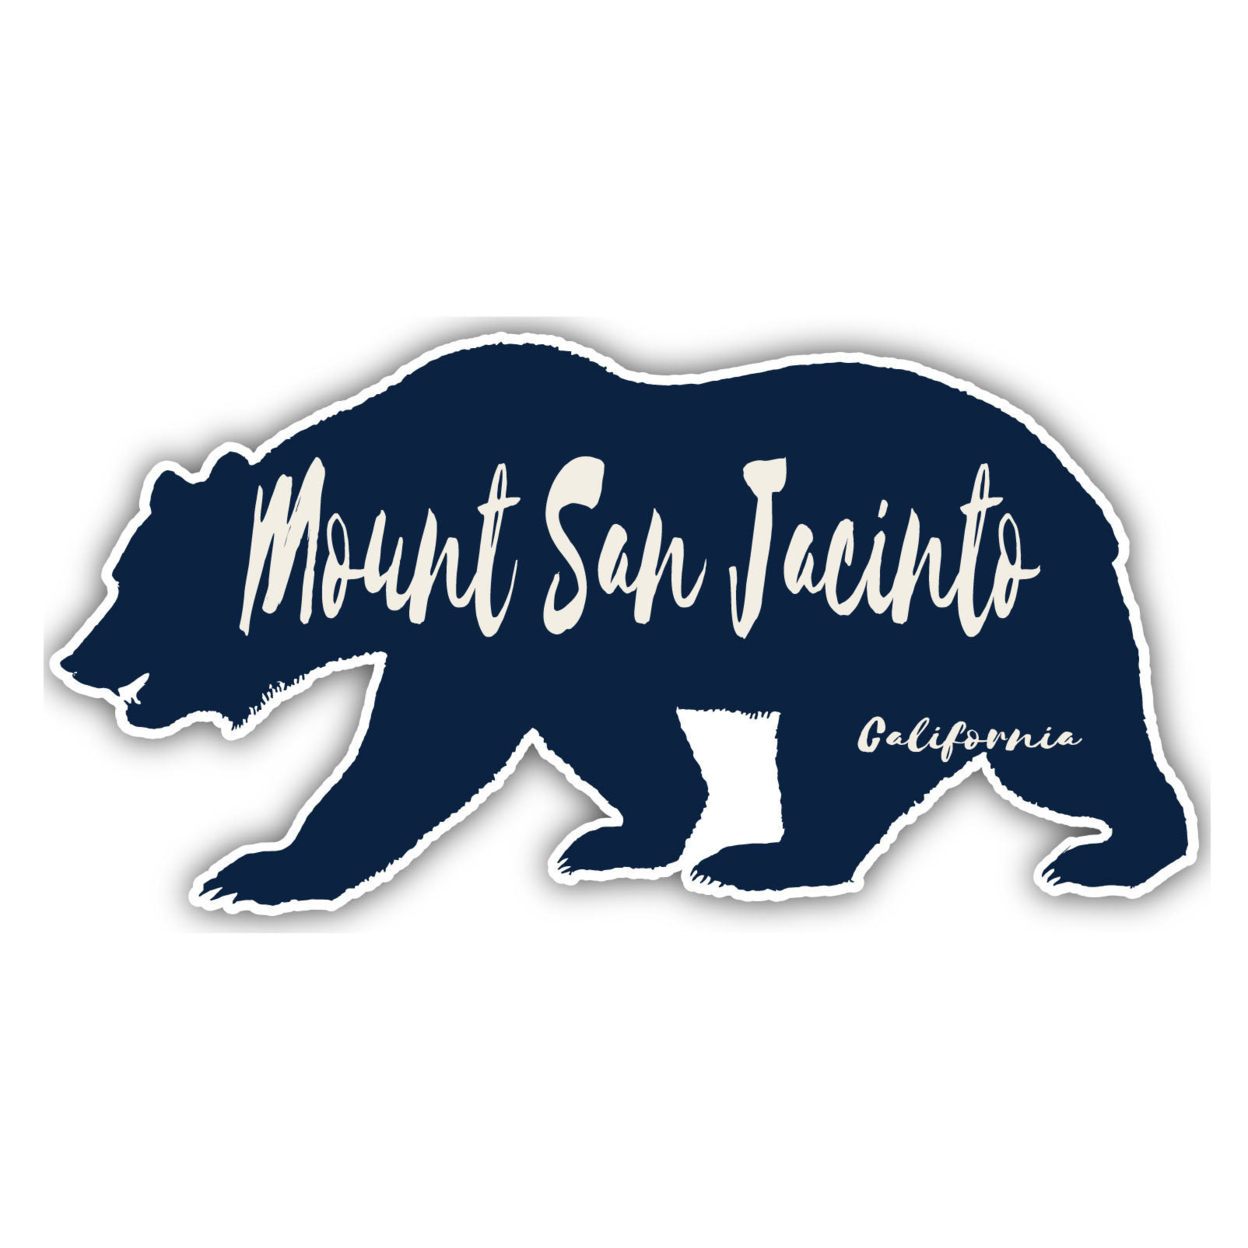 Mount San Jacinto California Souvenir Decorative Stickers (Choose Theme And Size) - Single Unit, 4-Inch, Camp Life